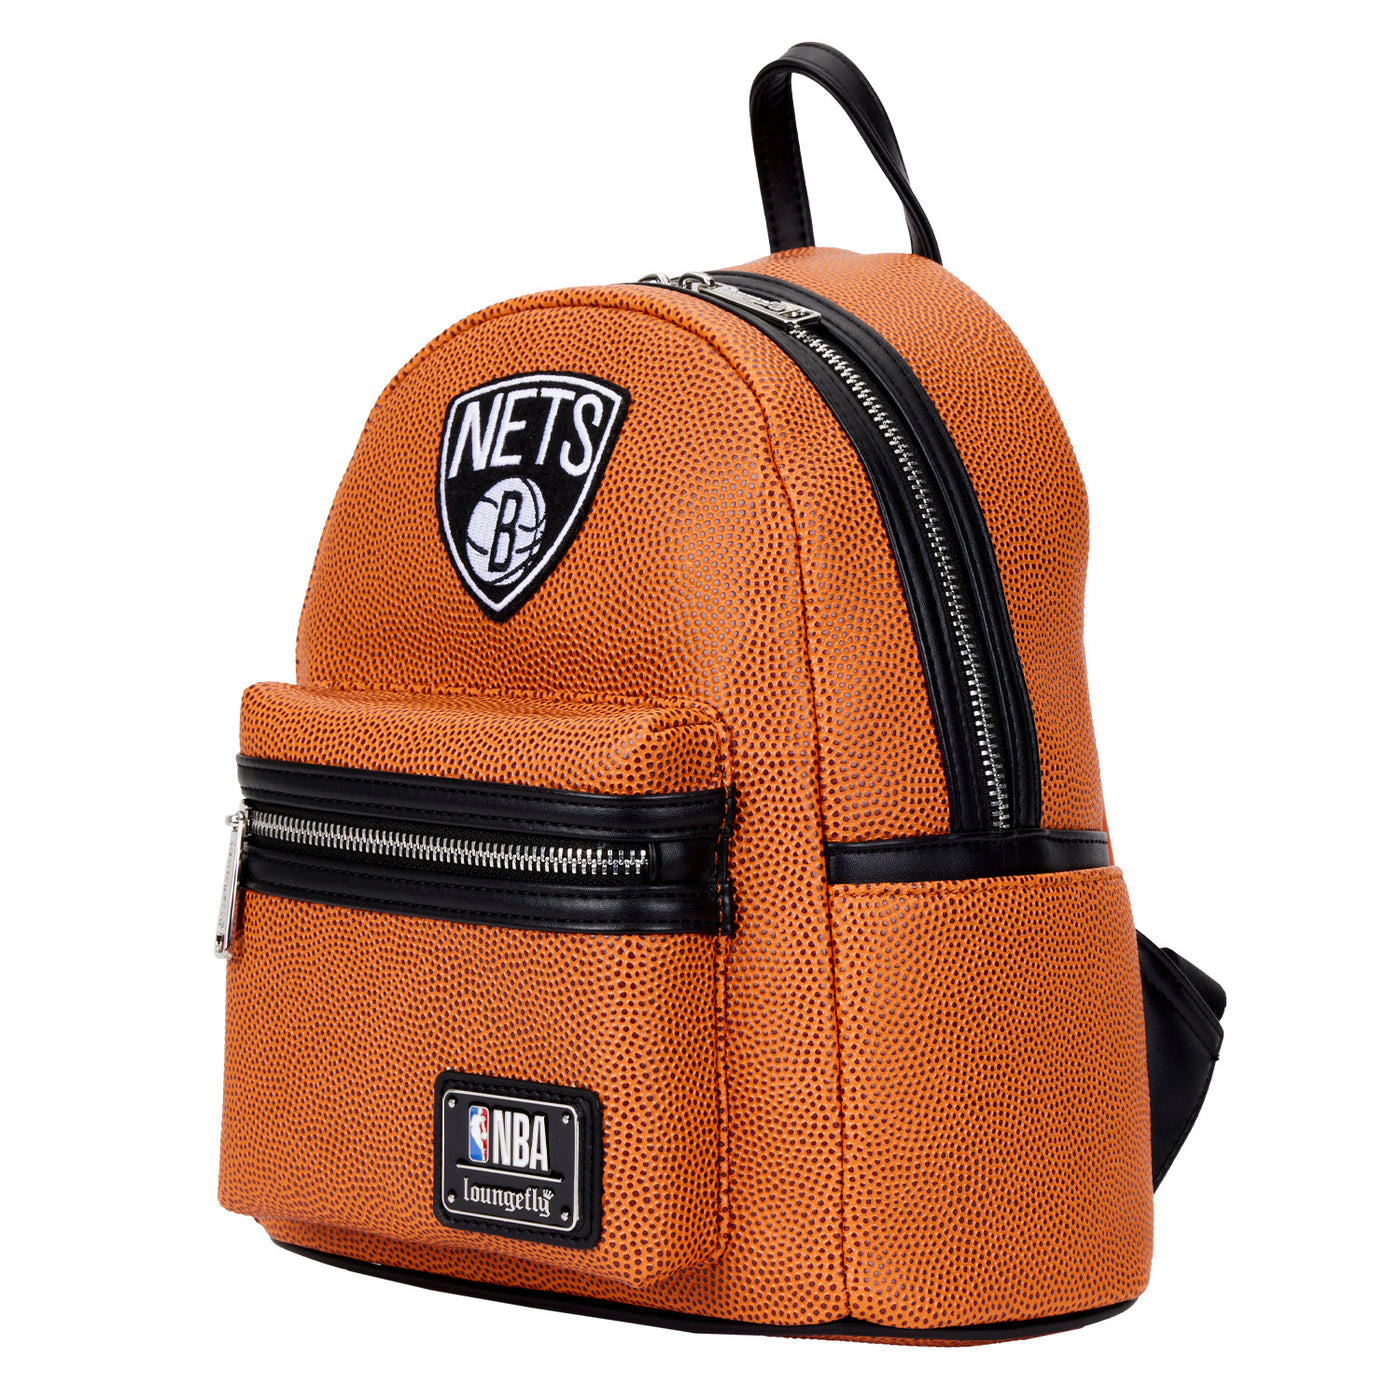 Official Brooklyn Nets Bags, Basketball Backpacks, Luggage, Purses